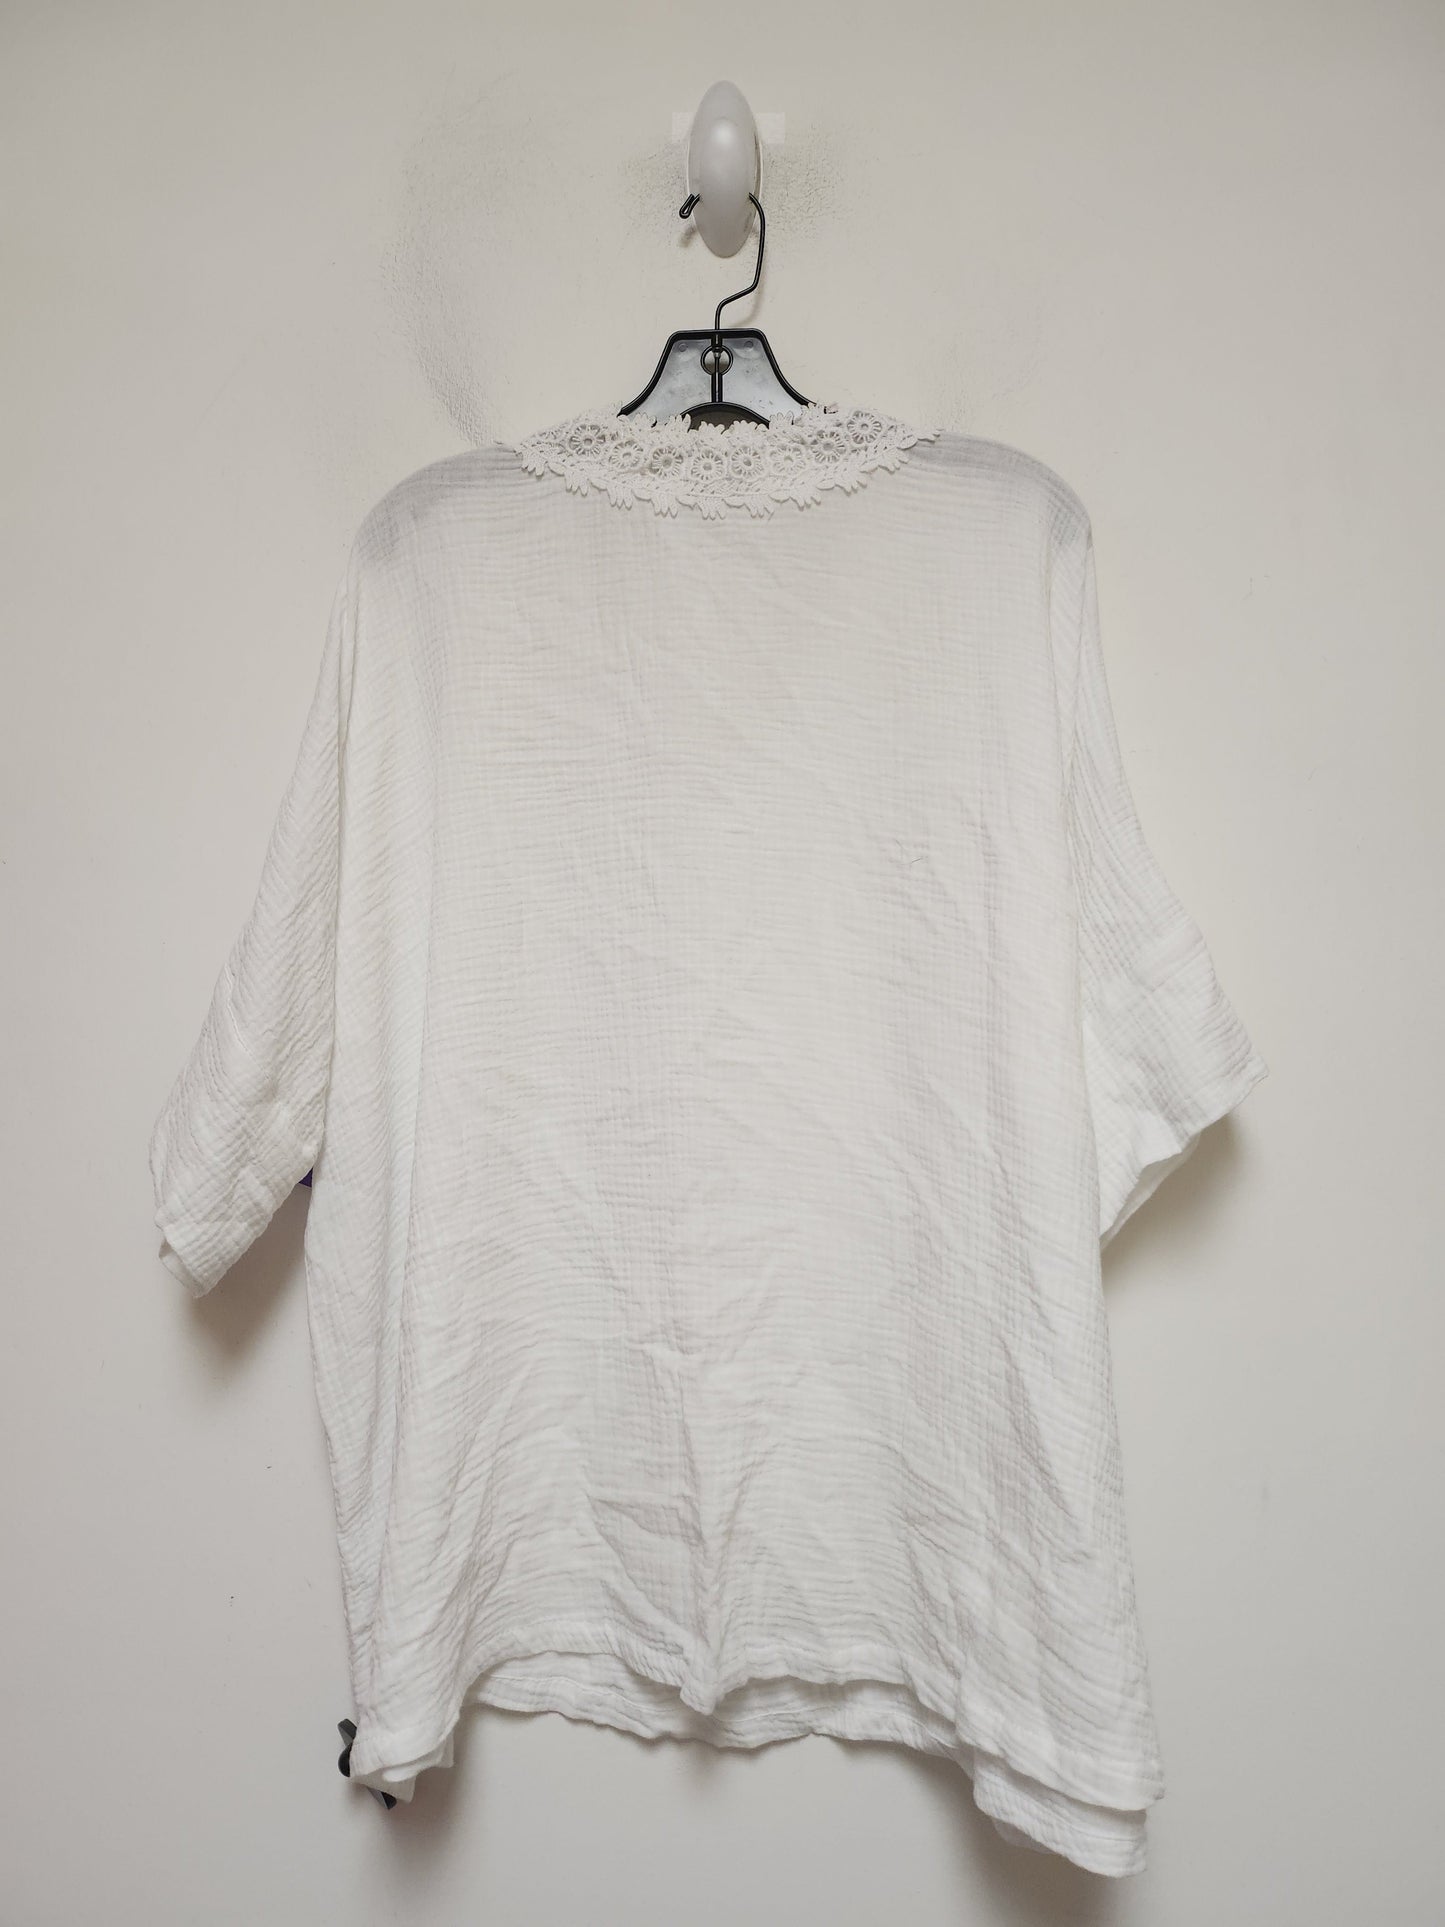 White Top Short Sleeve Jones New York, Size 1x